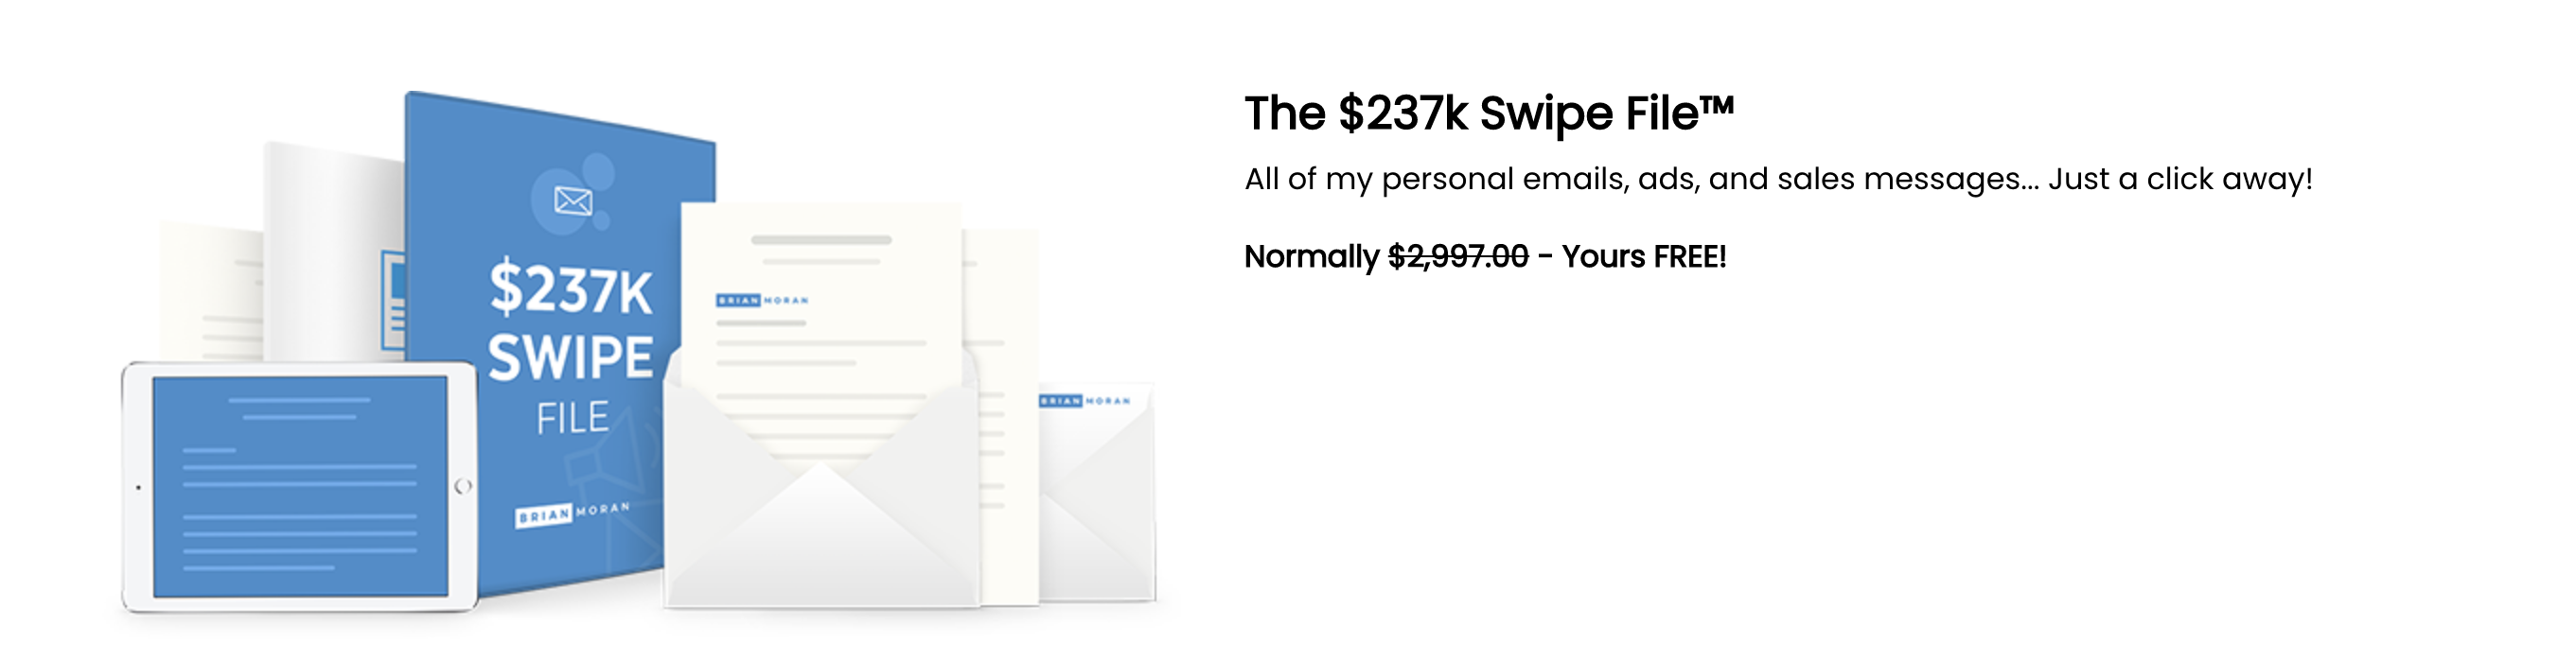 The 237k Swipe File Samcart 2020 bonus